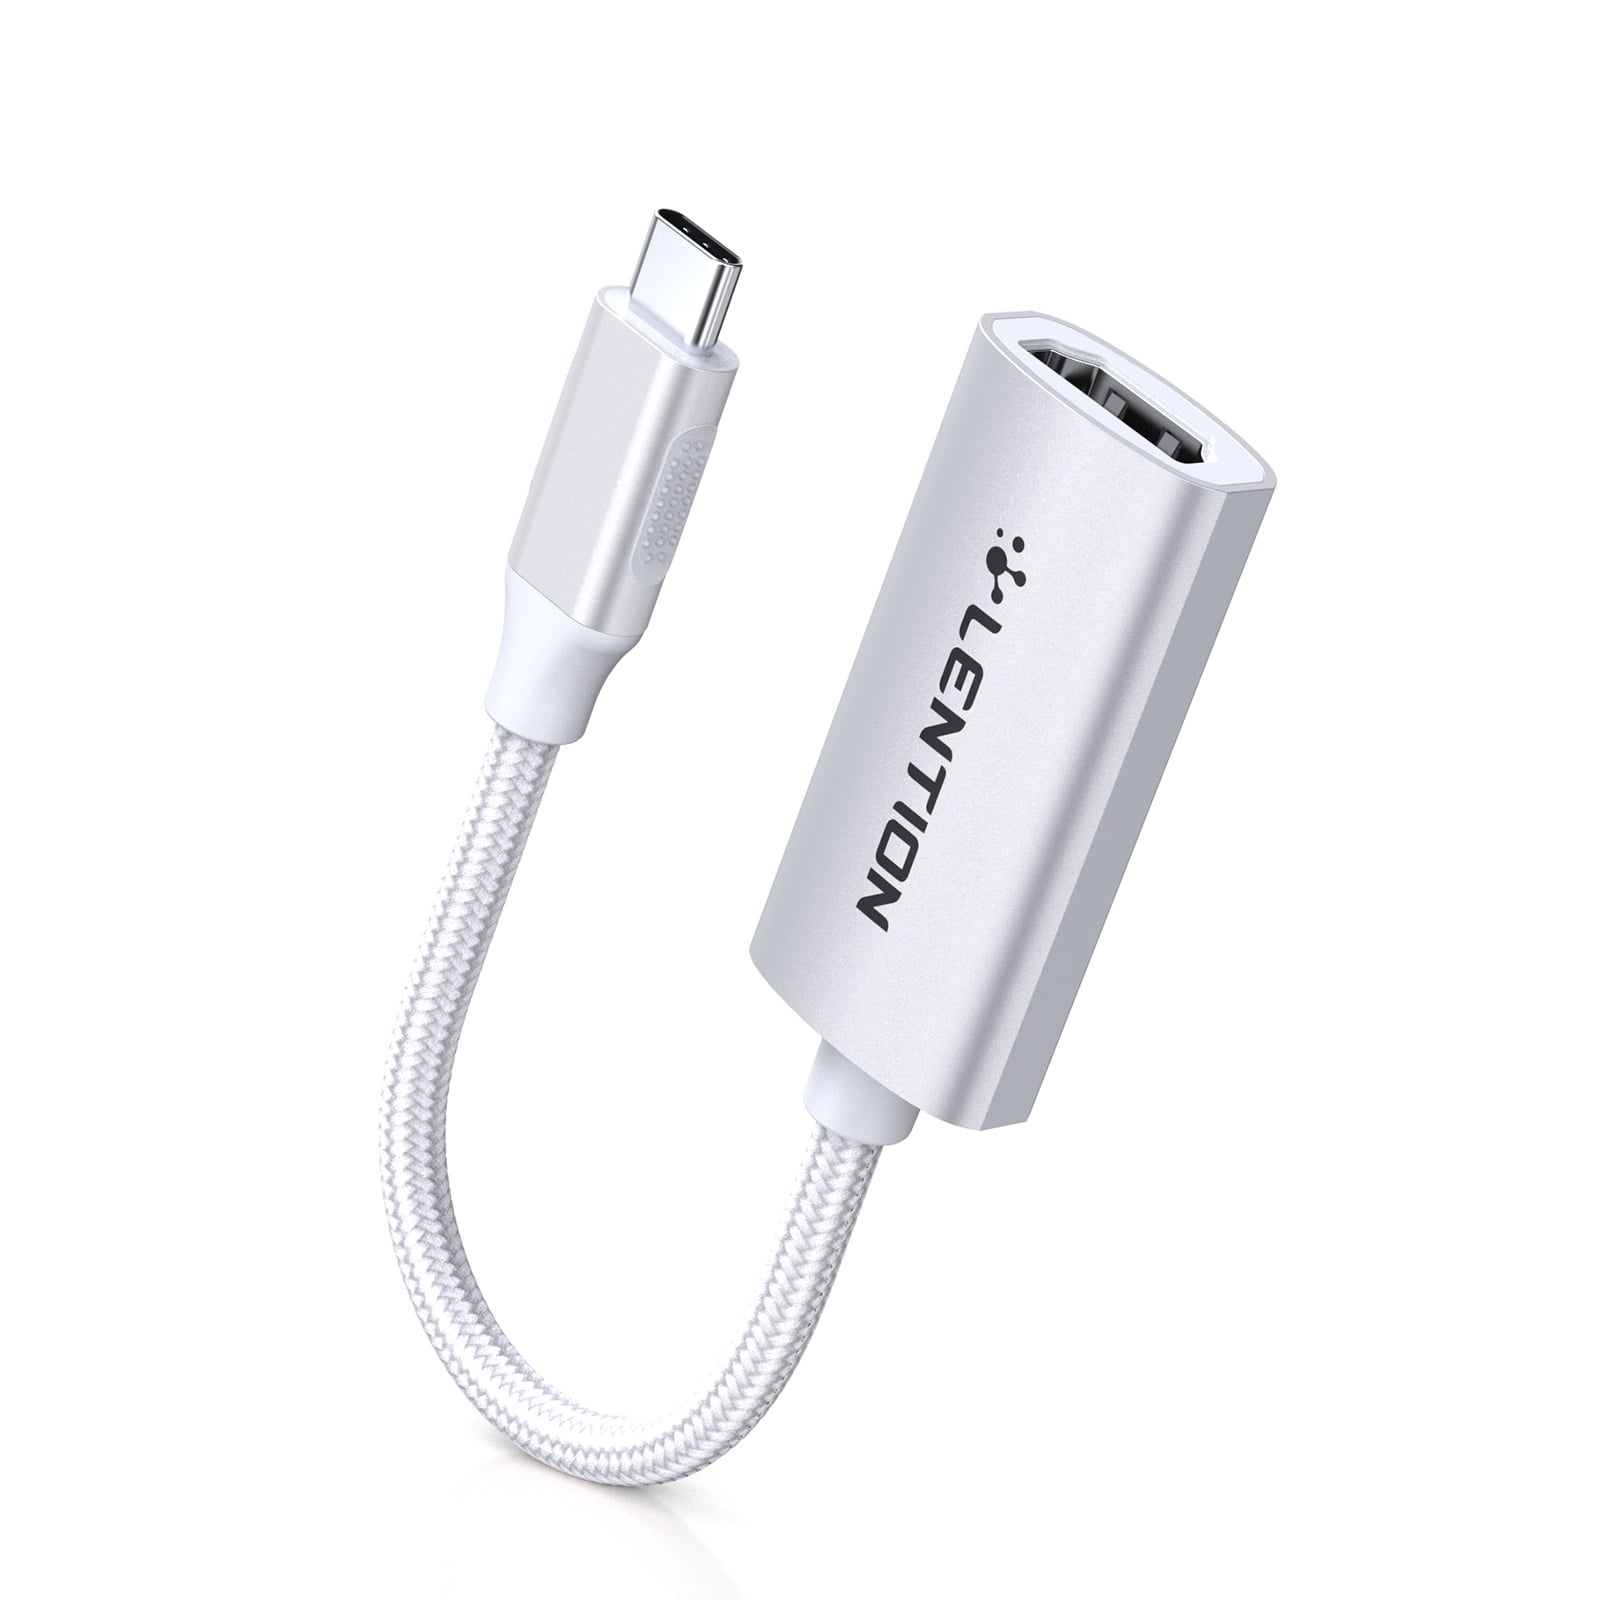 LENTION USB C to HDMI Adapter,4K/60Hz Digital AV Compatible 2023-2016 Pro iPad/Surface/Mac Air,Samsung S21/S20/S10/Note 21/20(CU607,Silver) - Walmart.com